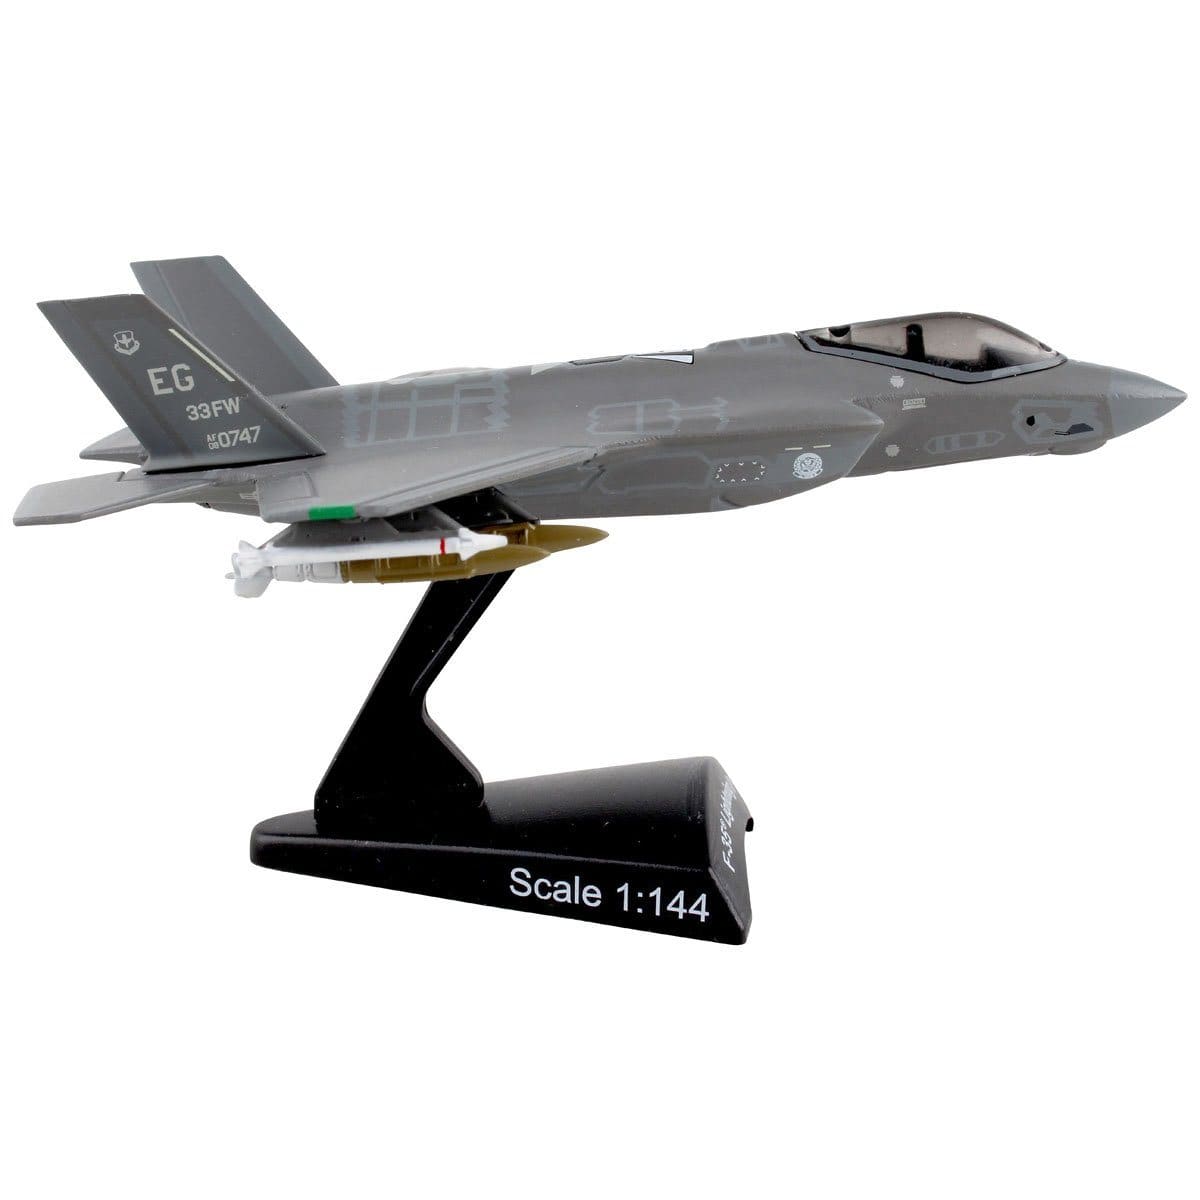 Postage Stamp F-35(A) Lightning II 58th FS 1/144 Die-Cast Metal Model Aircraft